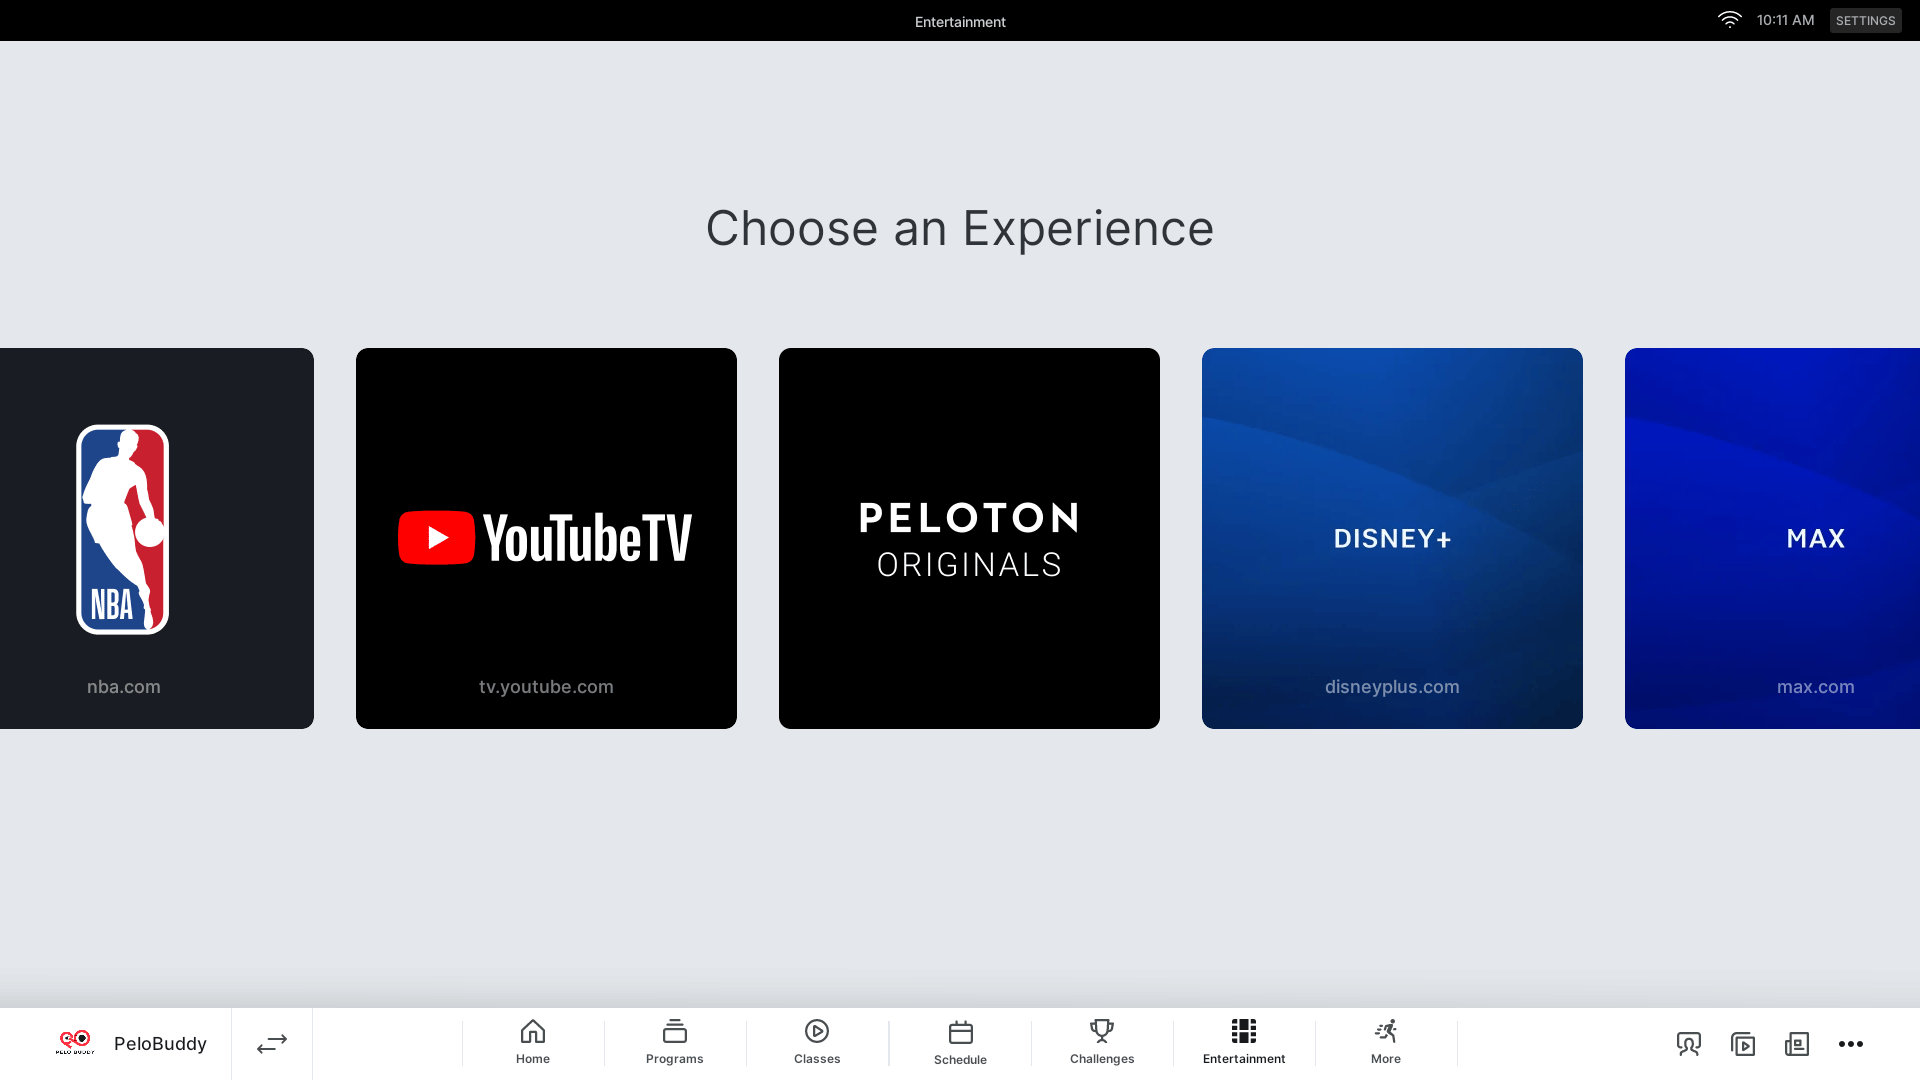 New "Peloton Originals" section of Peloton Entertainment.